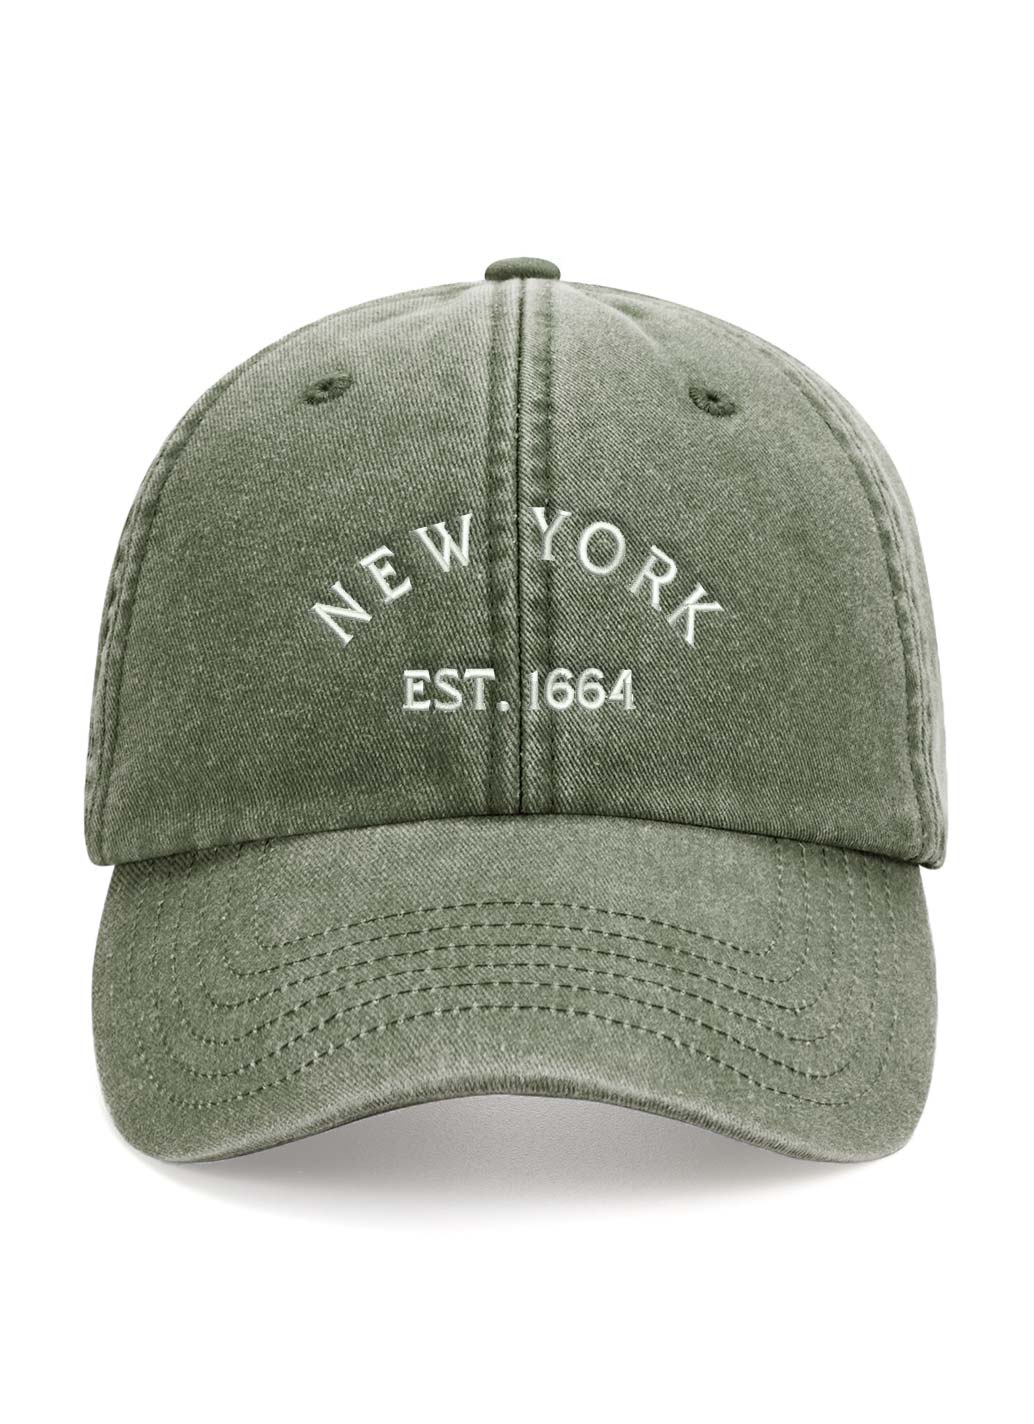 'NEW' VINTAGE NEW YORK CAP - OLIVE